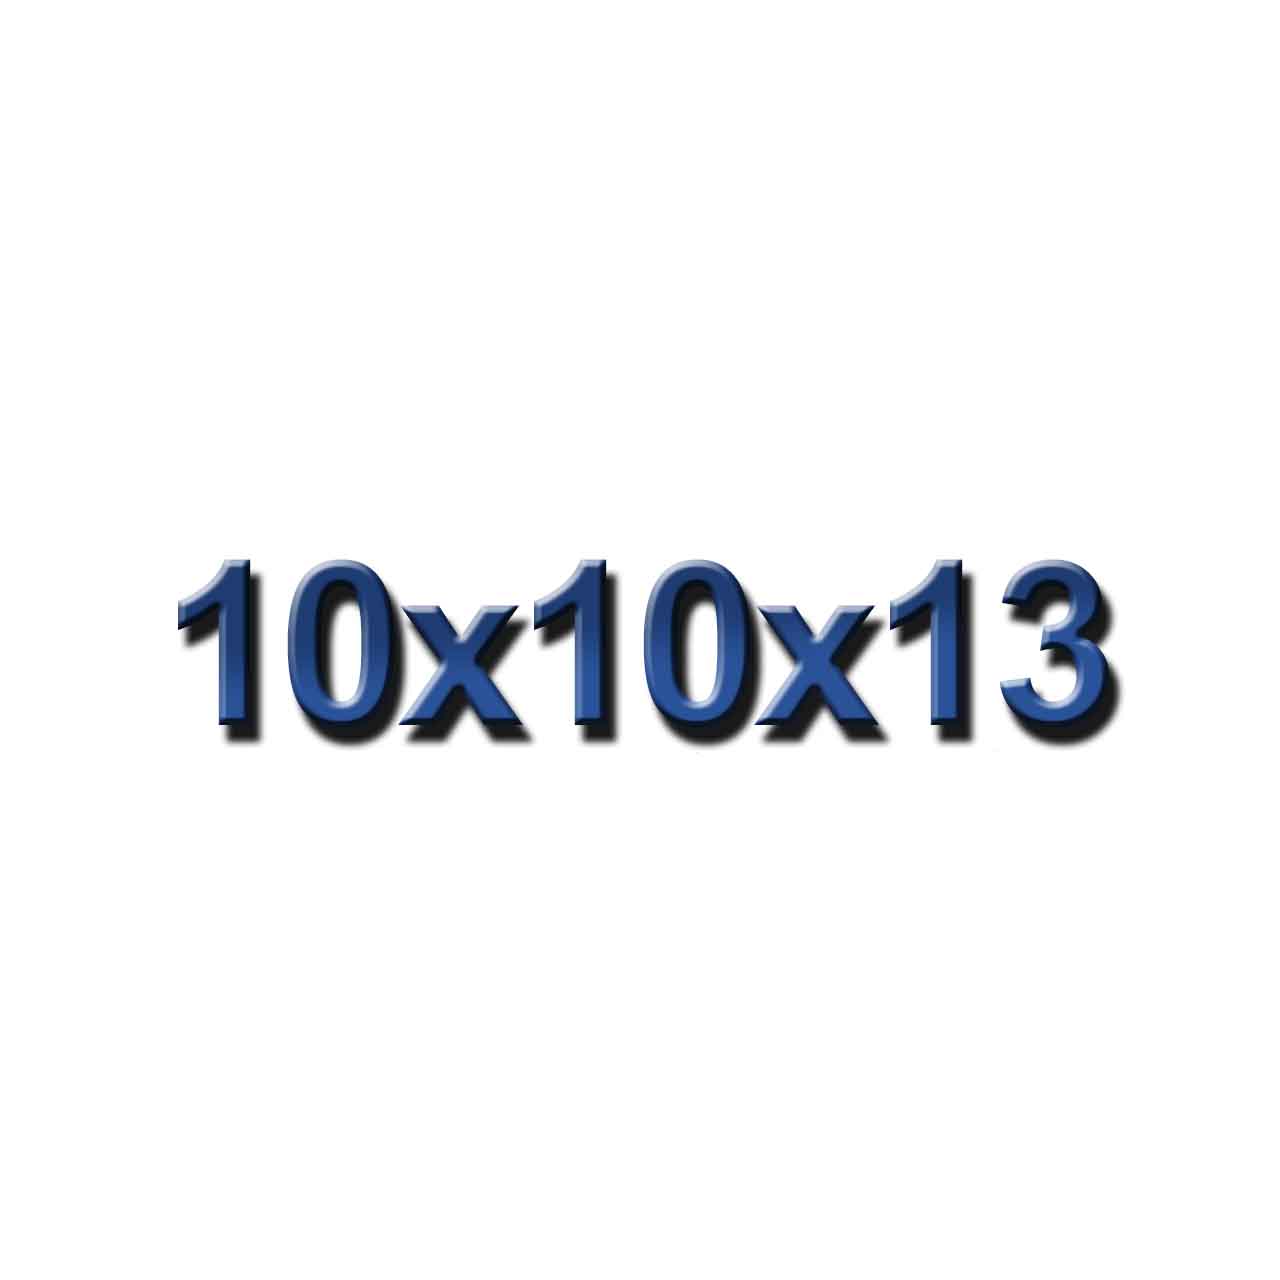 10x10x13